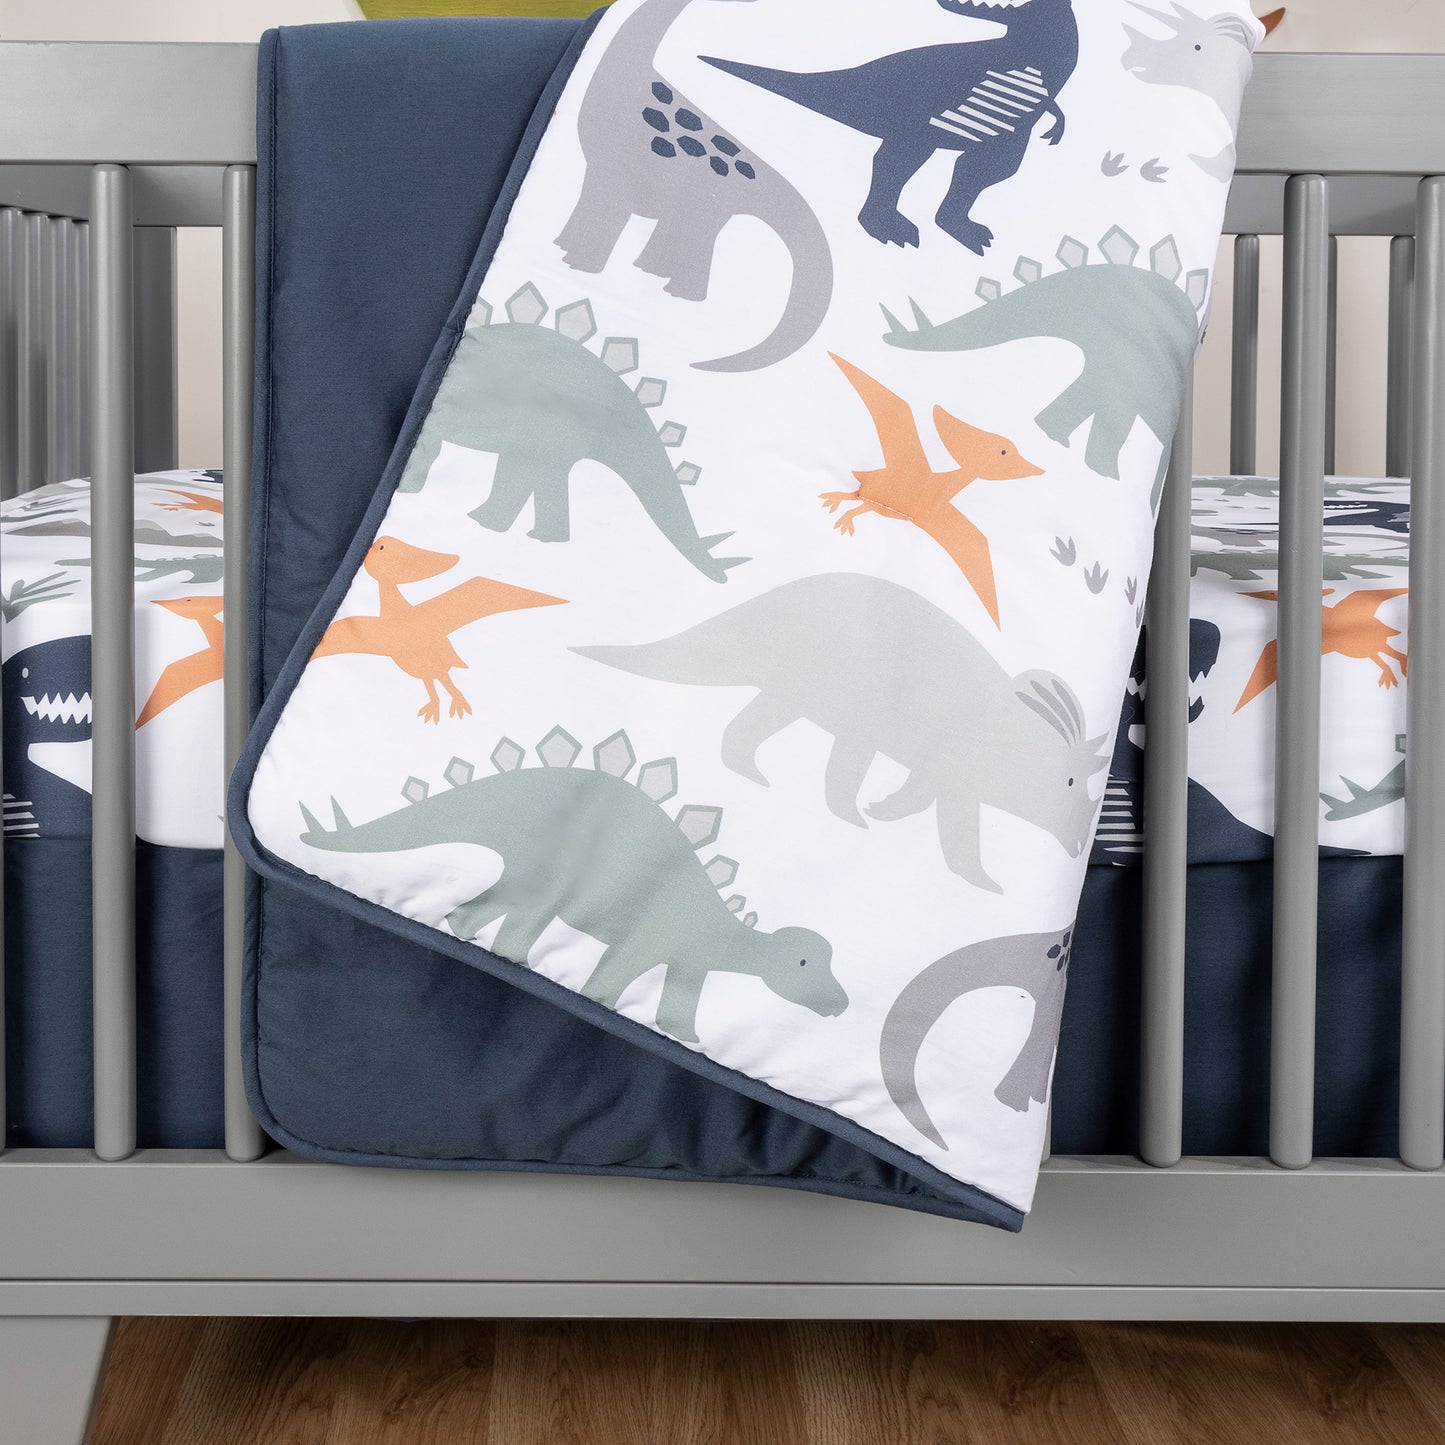 Prehistoric Dino’s 3 Piece Crib Bedding Set